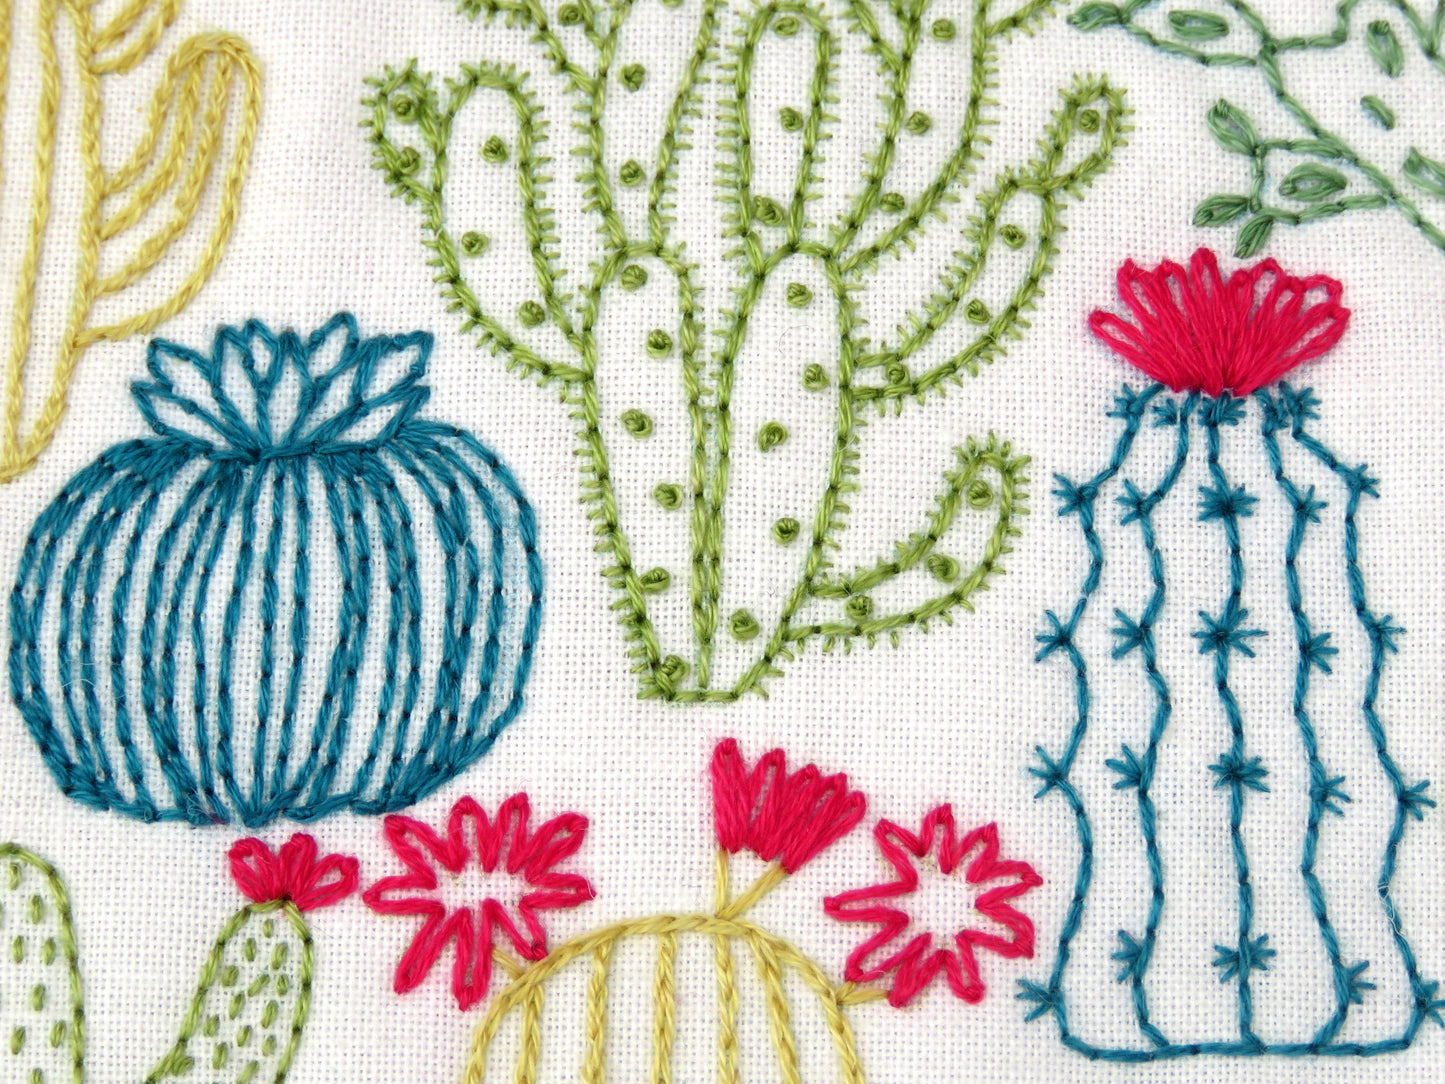 Cactus Fabric Pattern Pack - Fabric Packs - ohsewbootiful